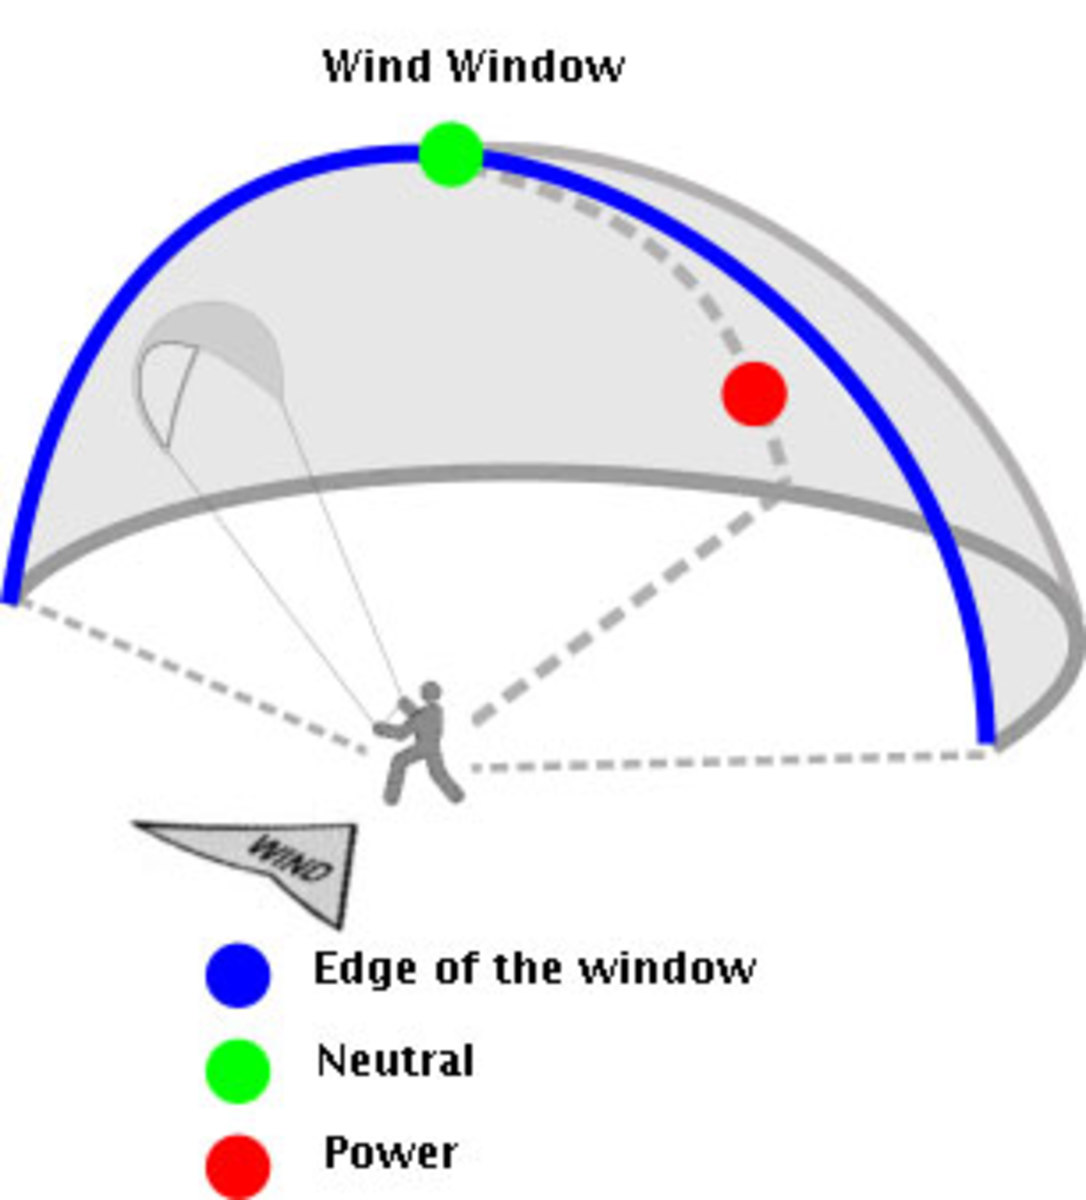 The wind window